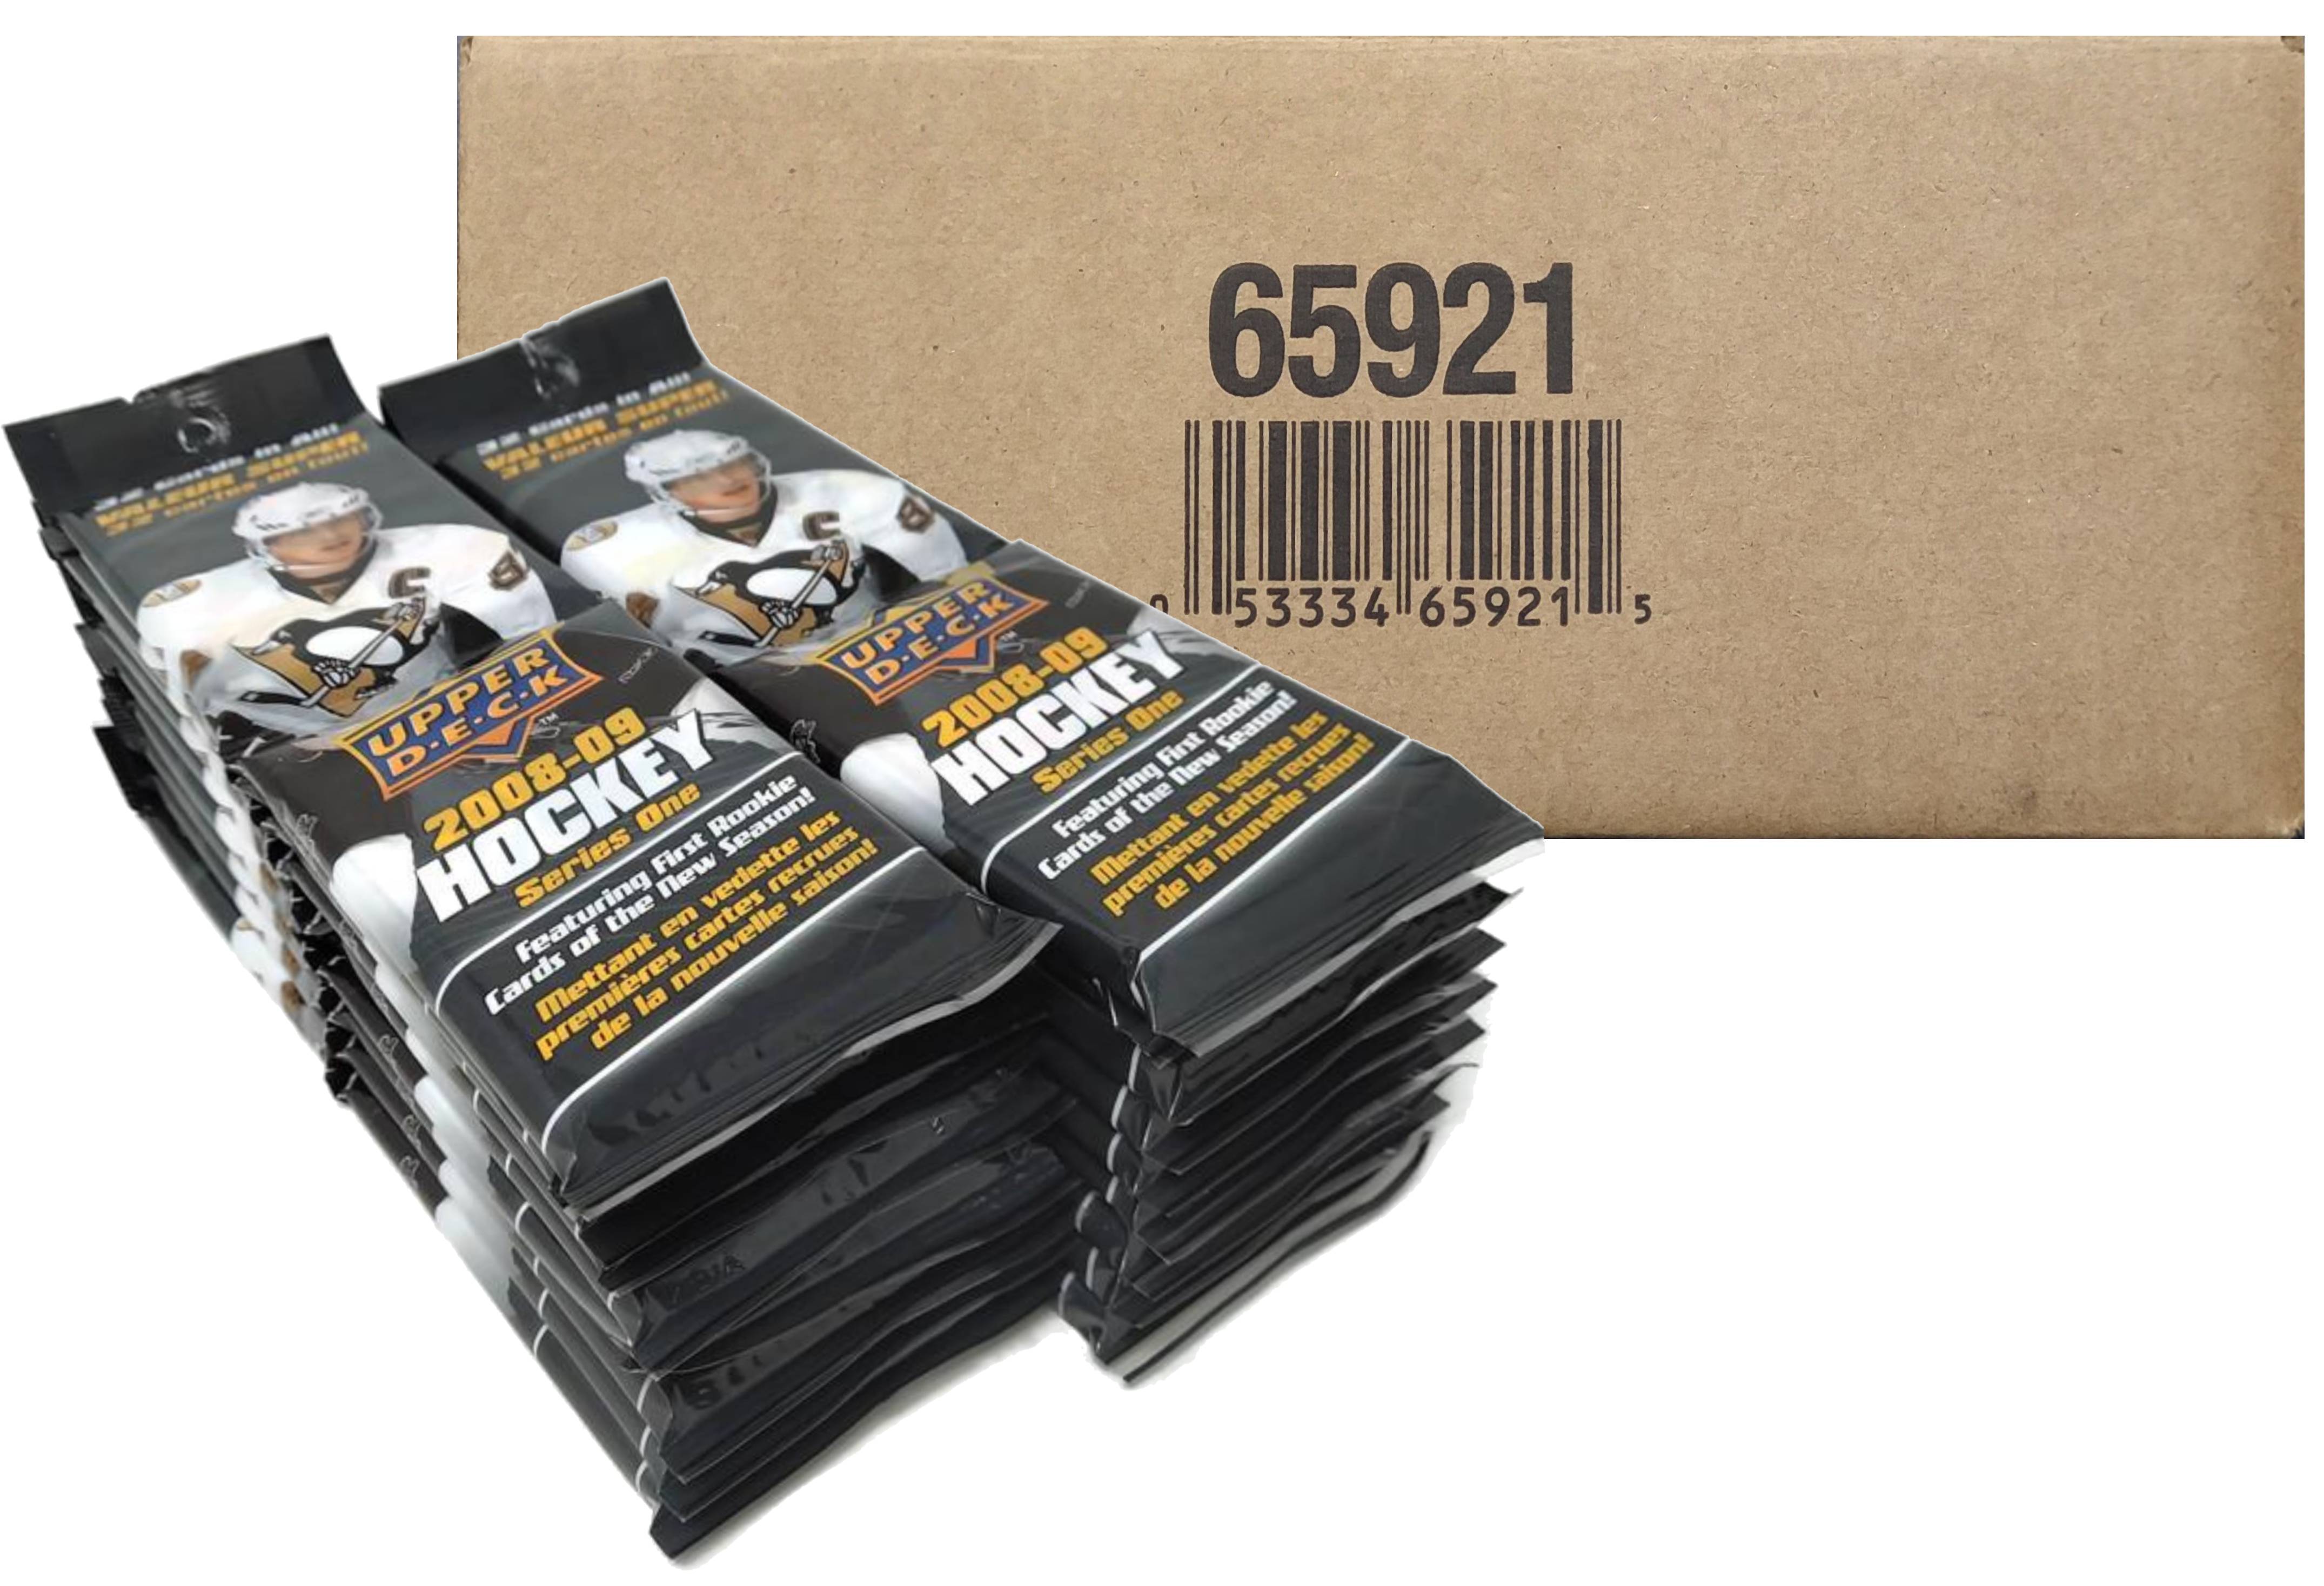 2008-09 Upper Deck Series 1 Hockey Fat Pack (18 Packs per Box) - Miraj Trading